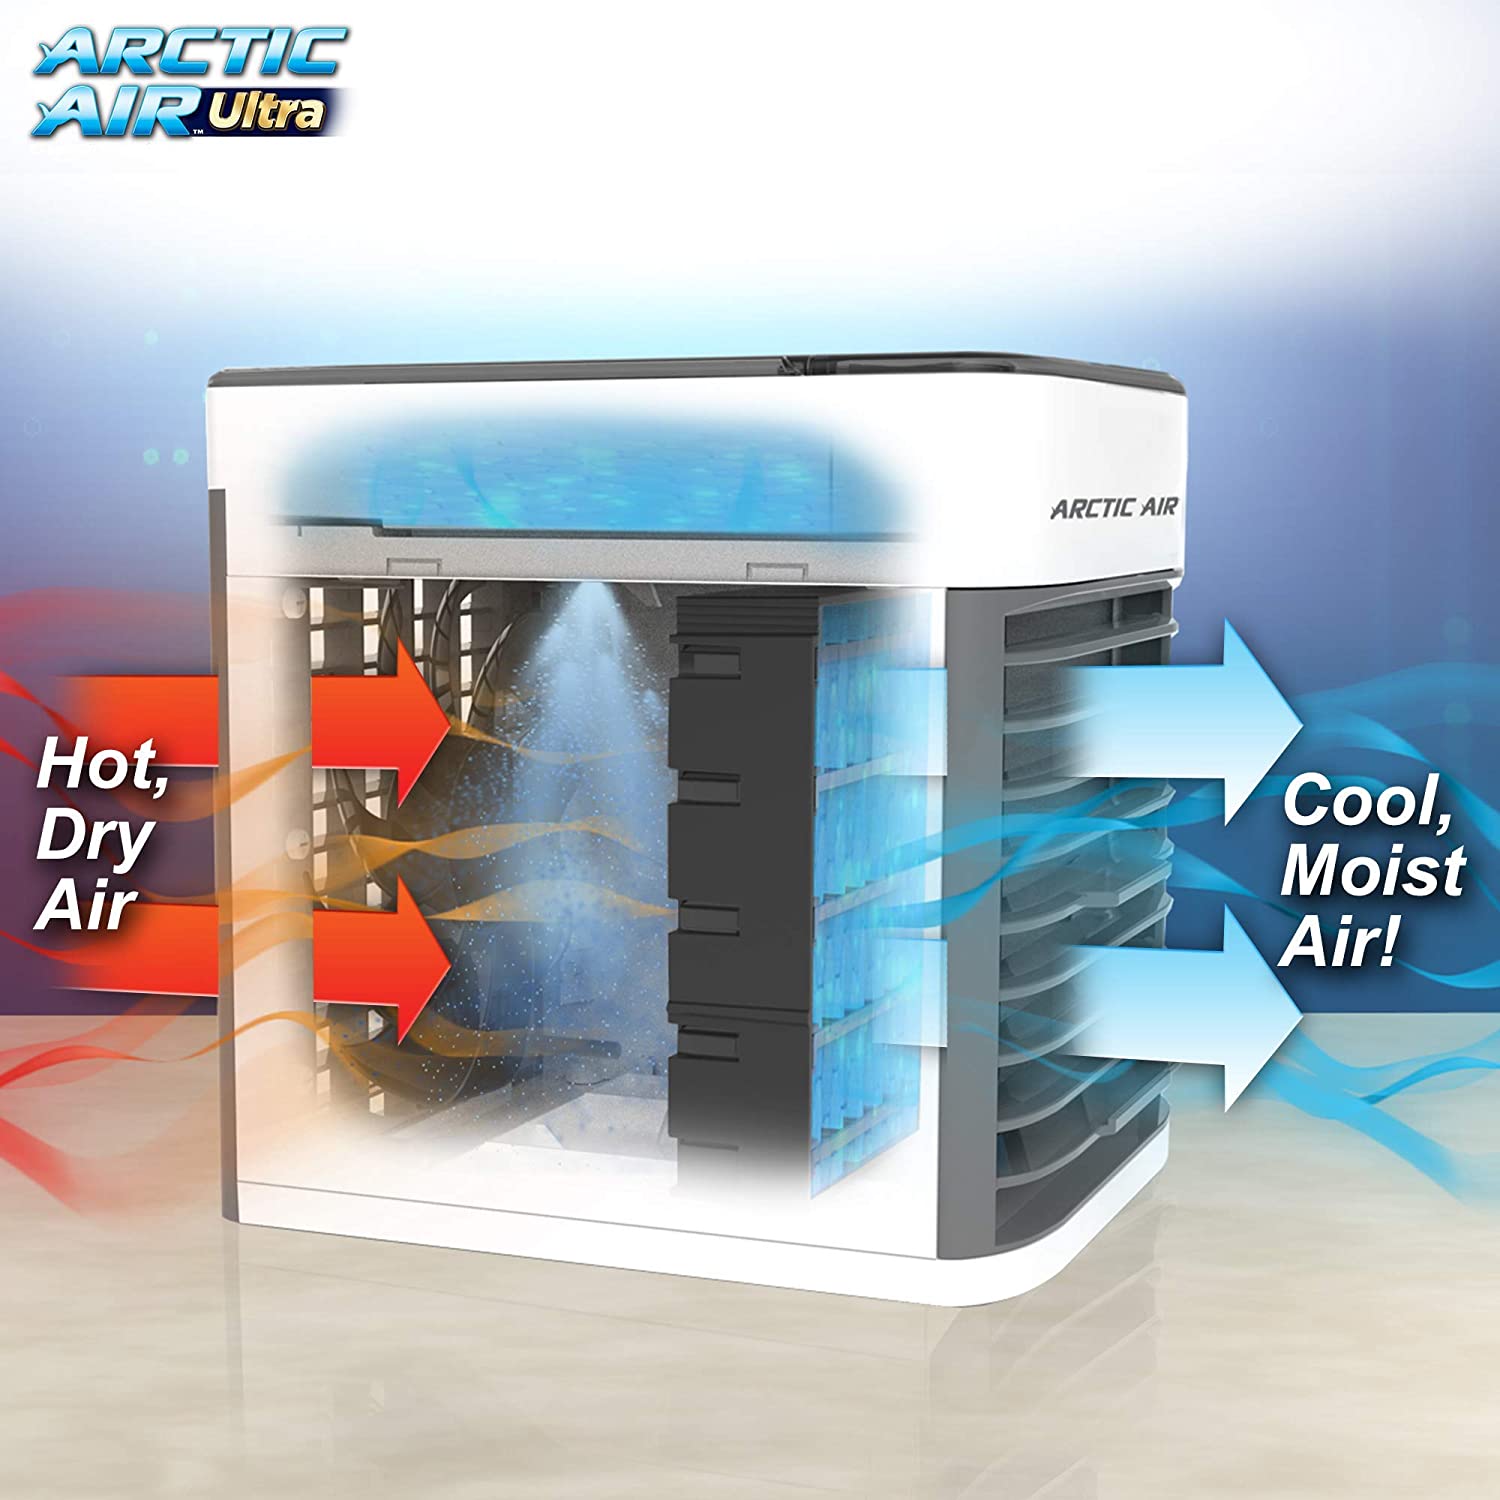 ARCTIC AIR Ontel Ultra Evaporative Portable Air Conditioner